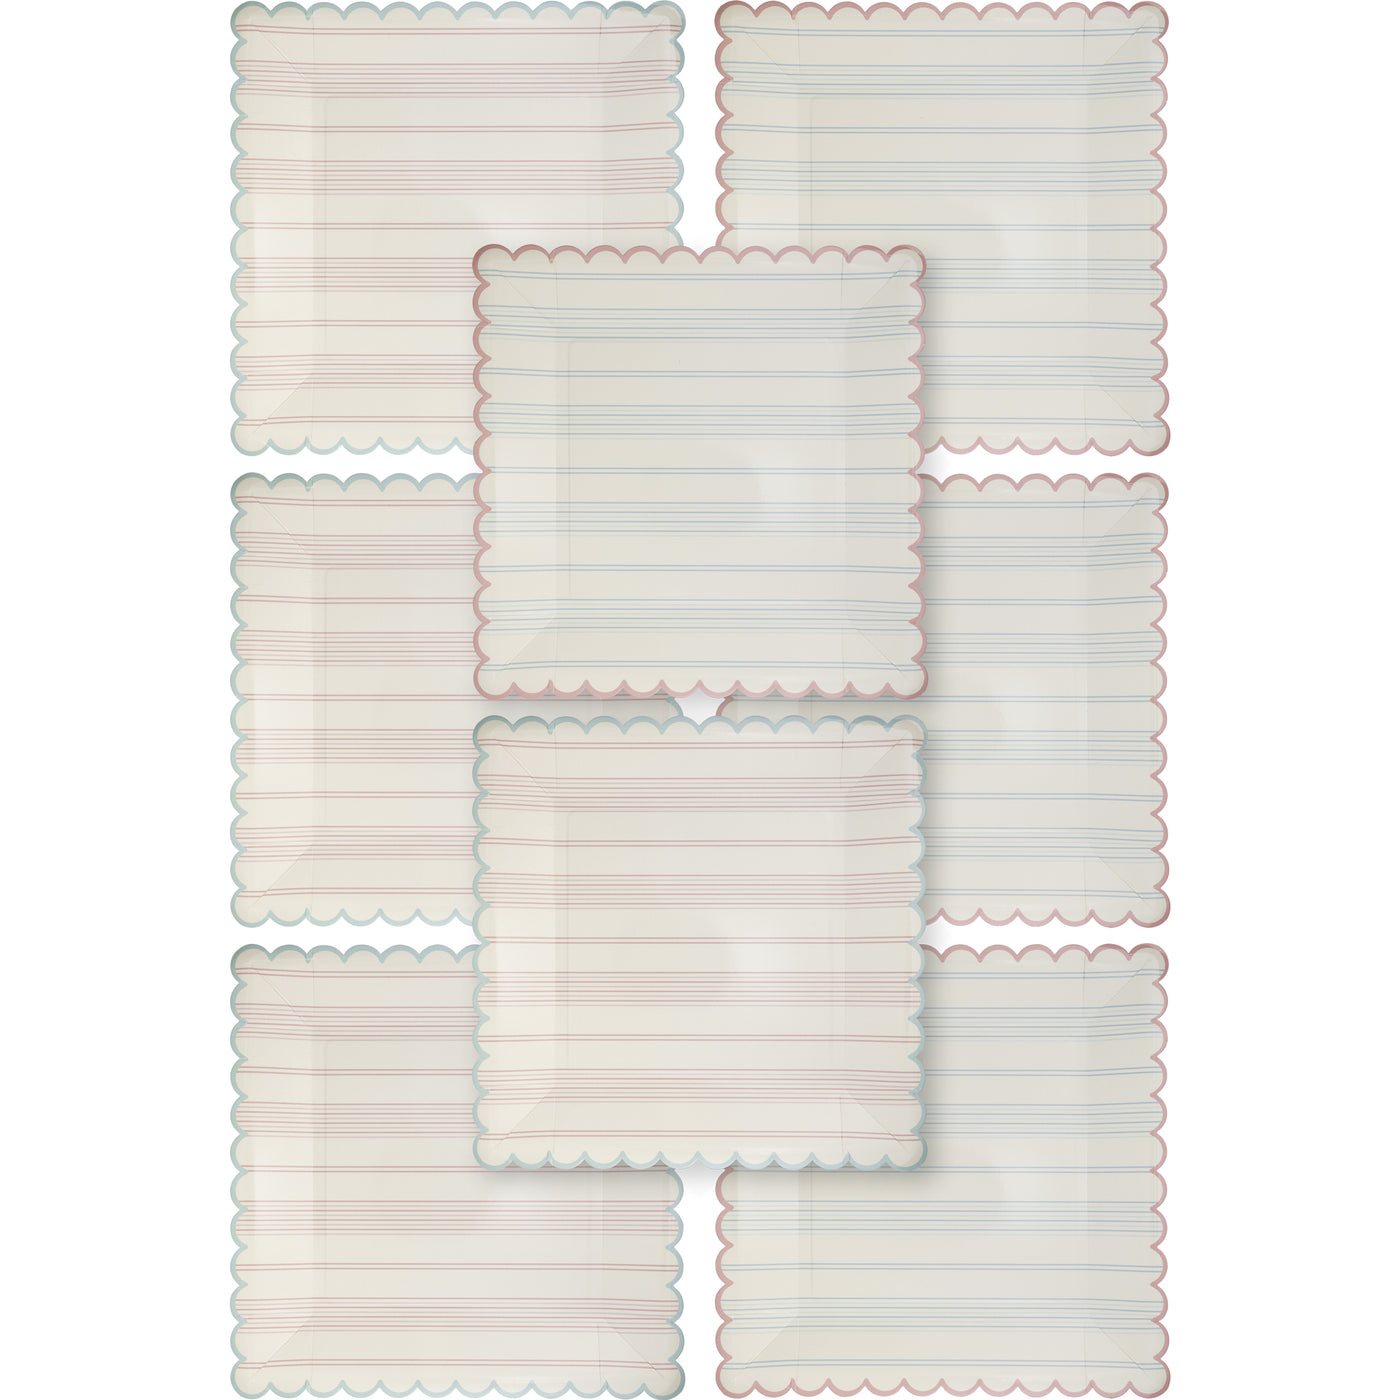 SPR1043 - Pastel Striped Paper Plate Set